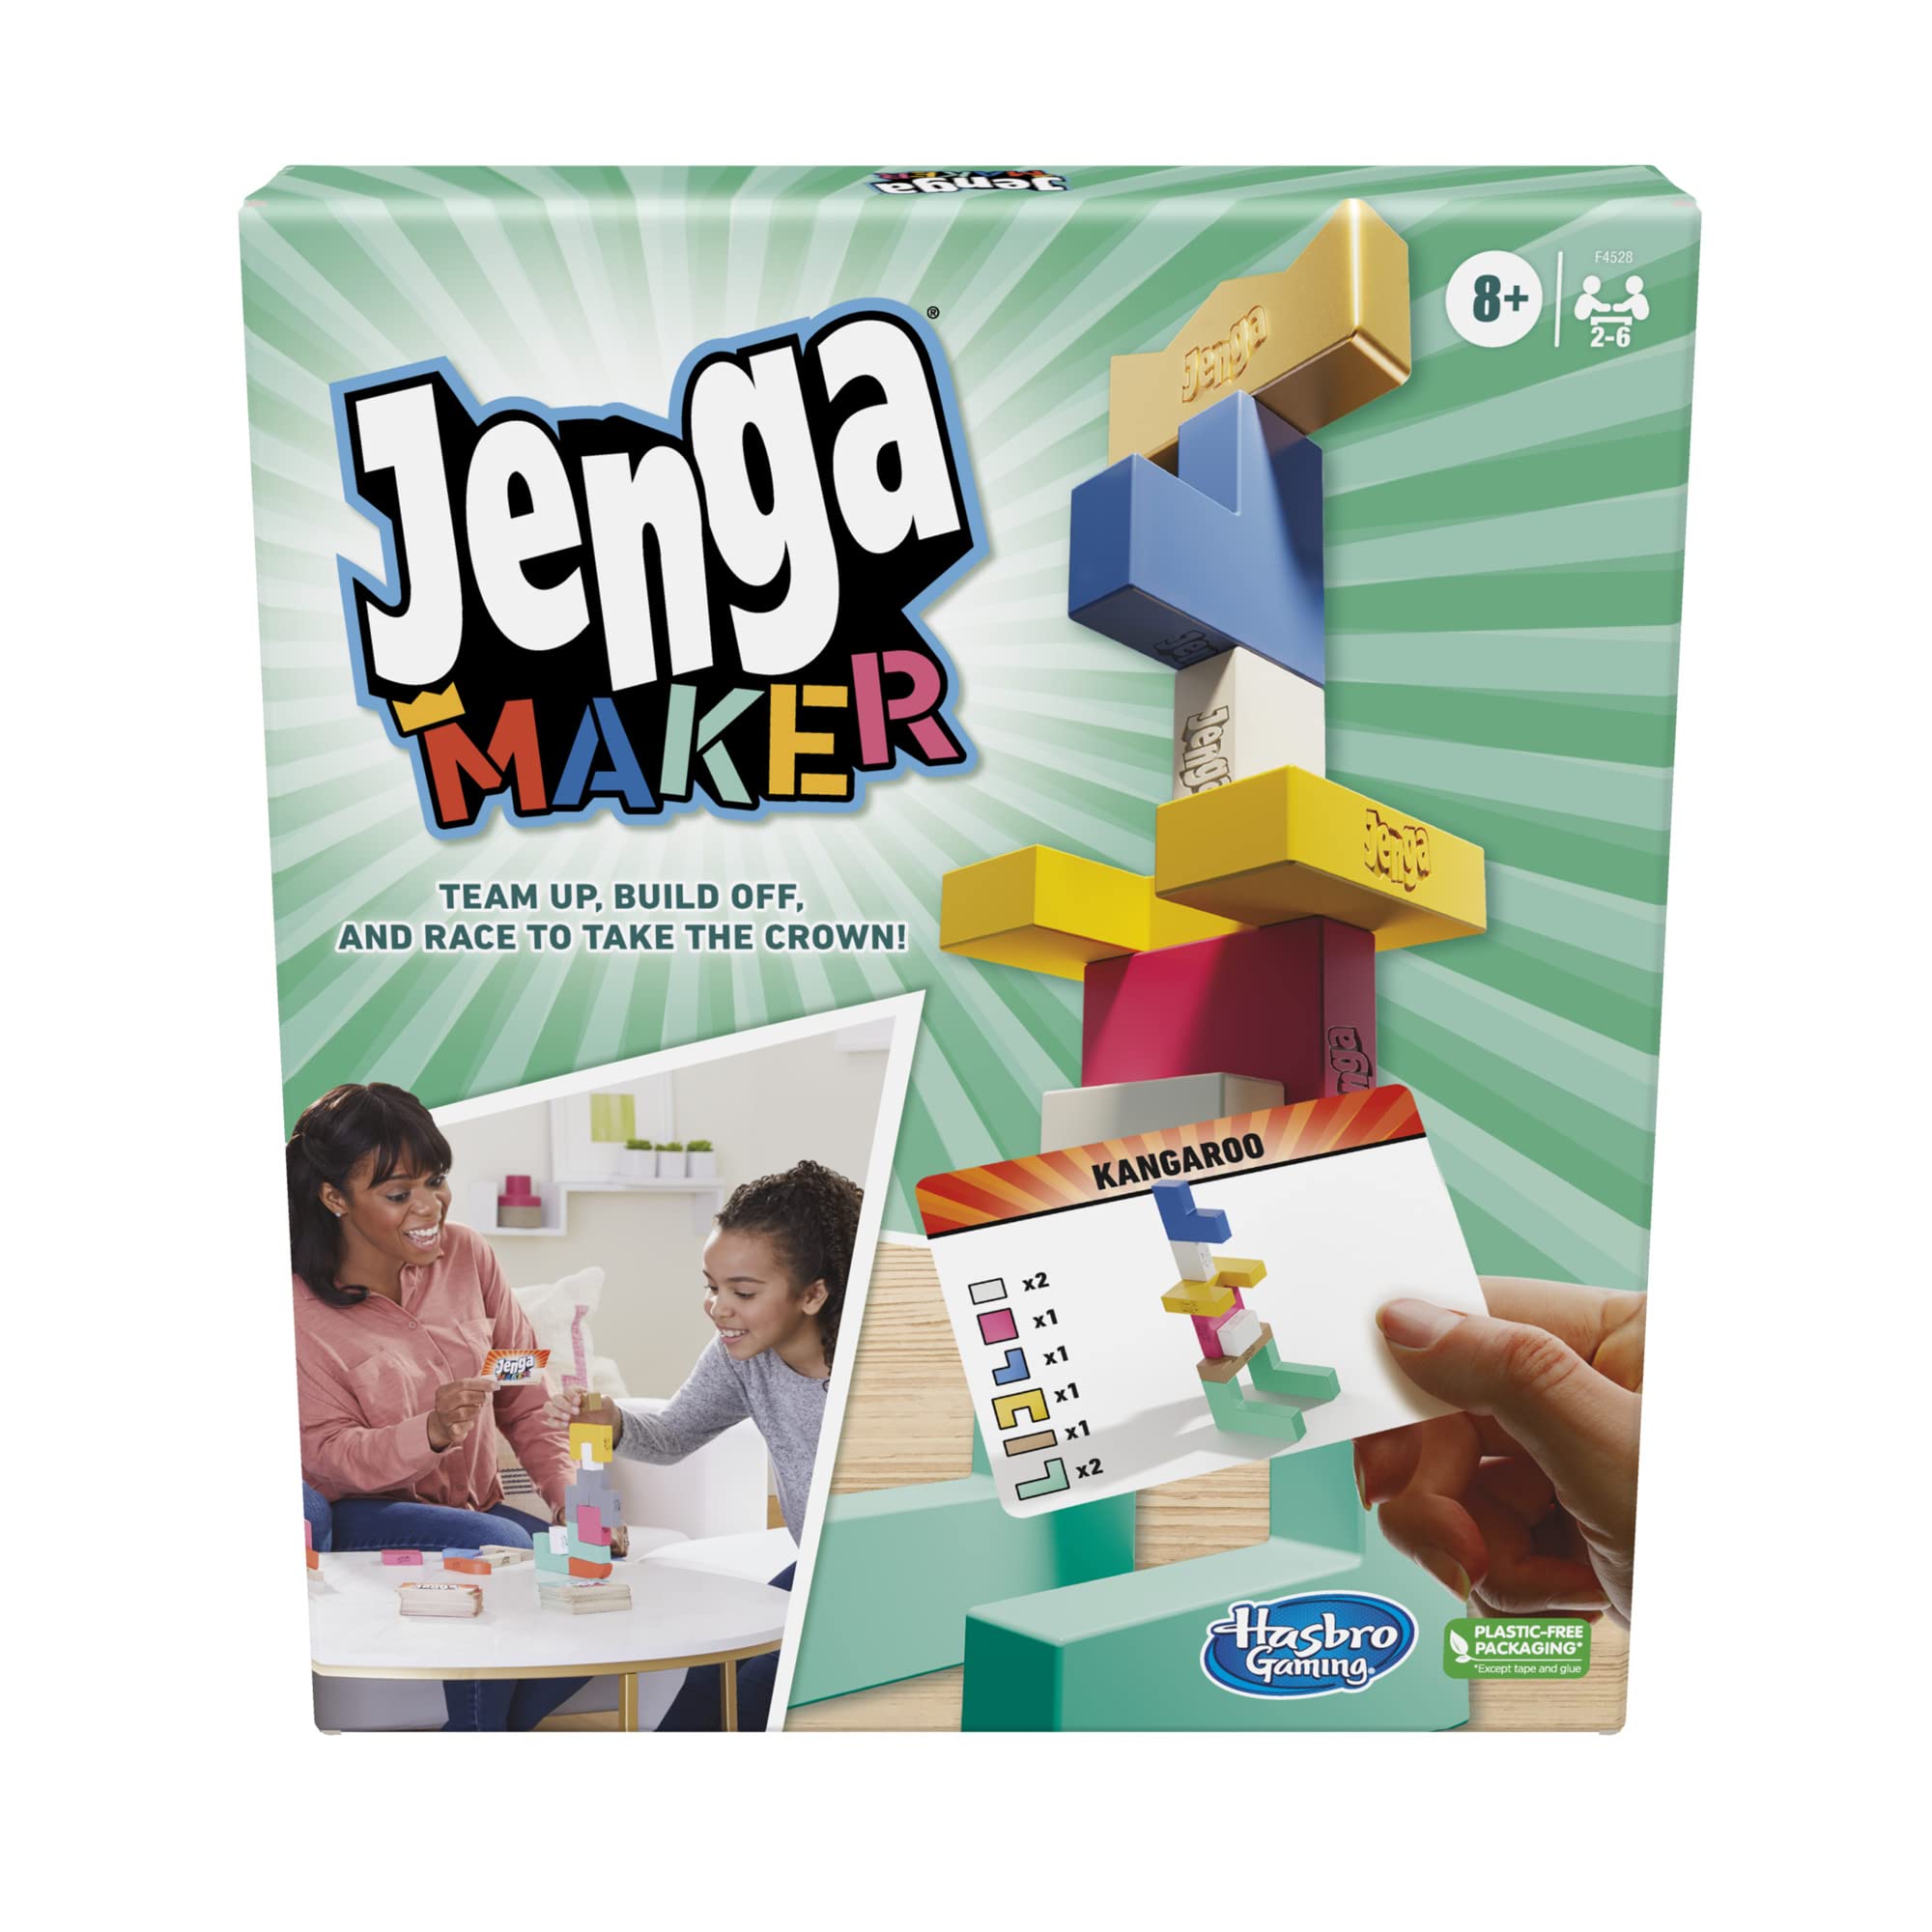 Jenga Maker, Wooden Blocks, Stacking Tower Game - $7.99 - Amazon